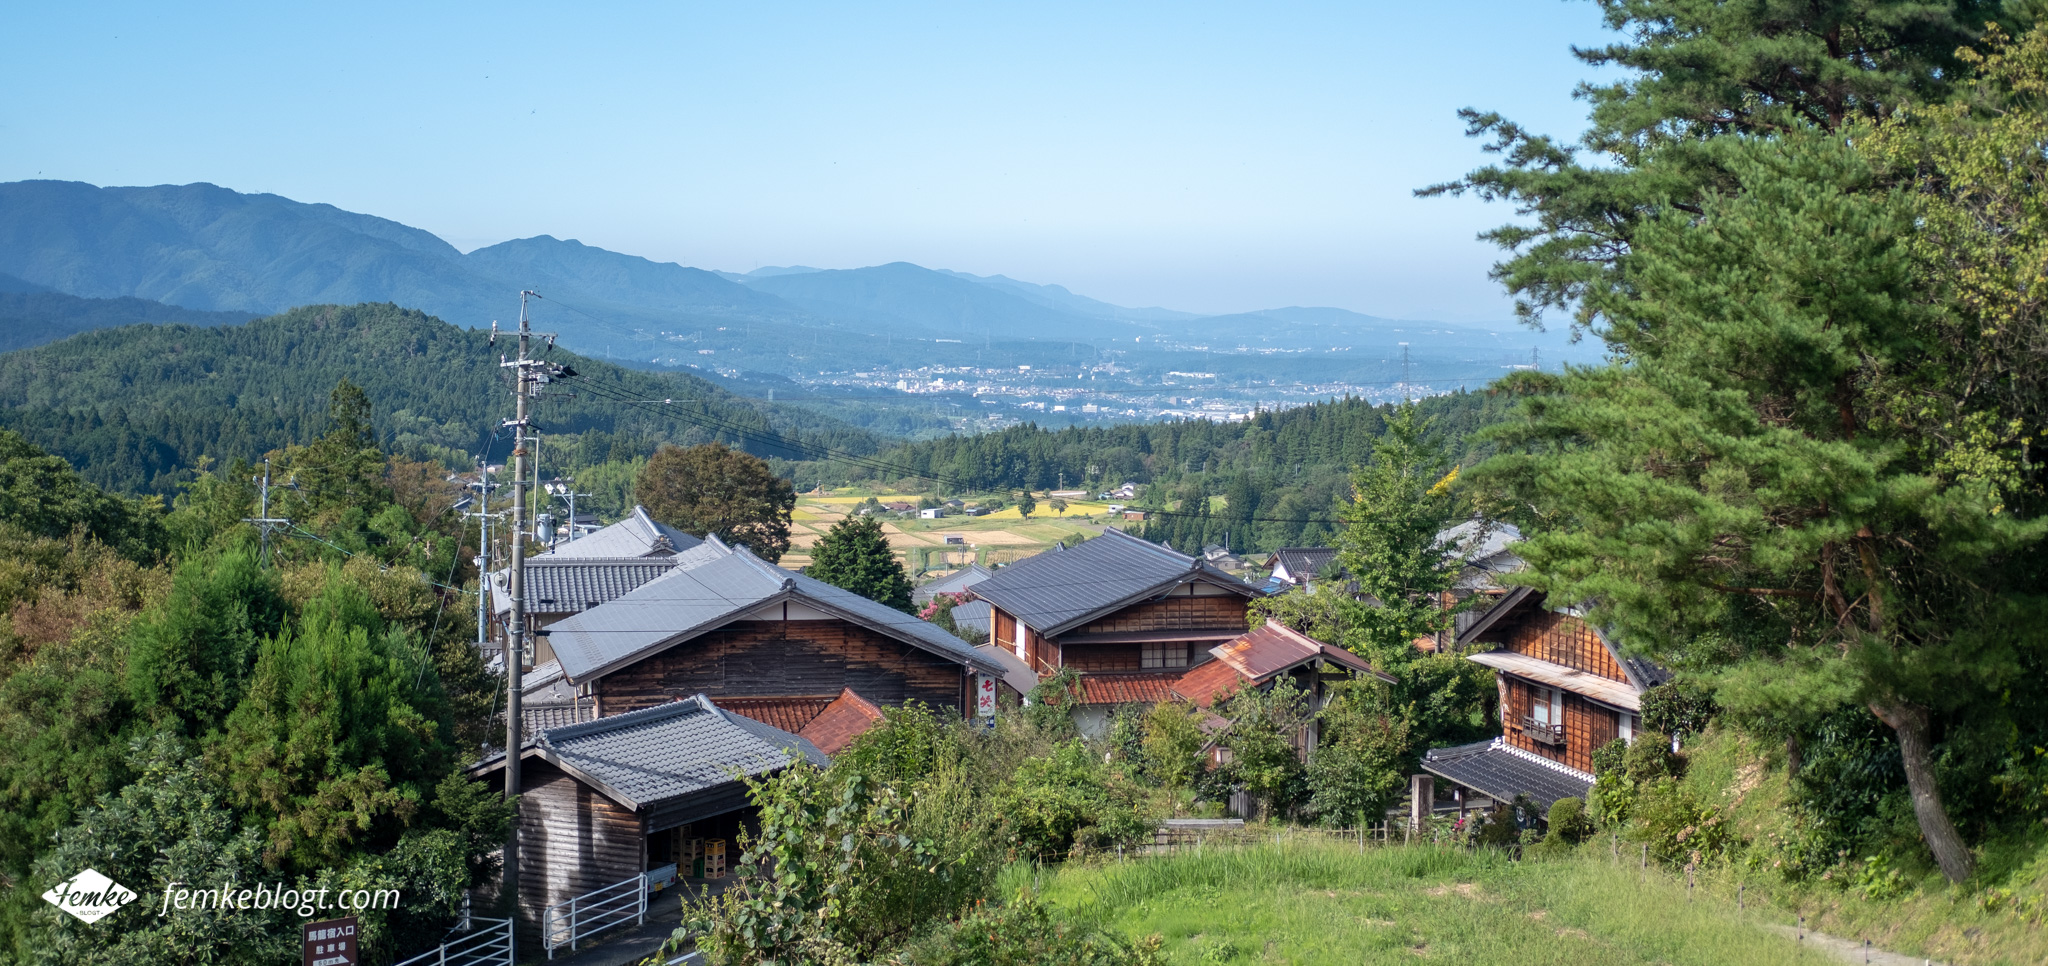 Hiken in Japan | De Nakasendo trail wandelen